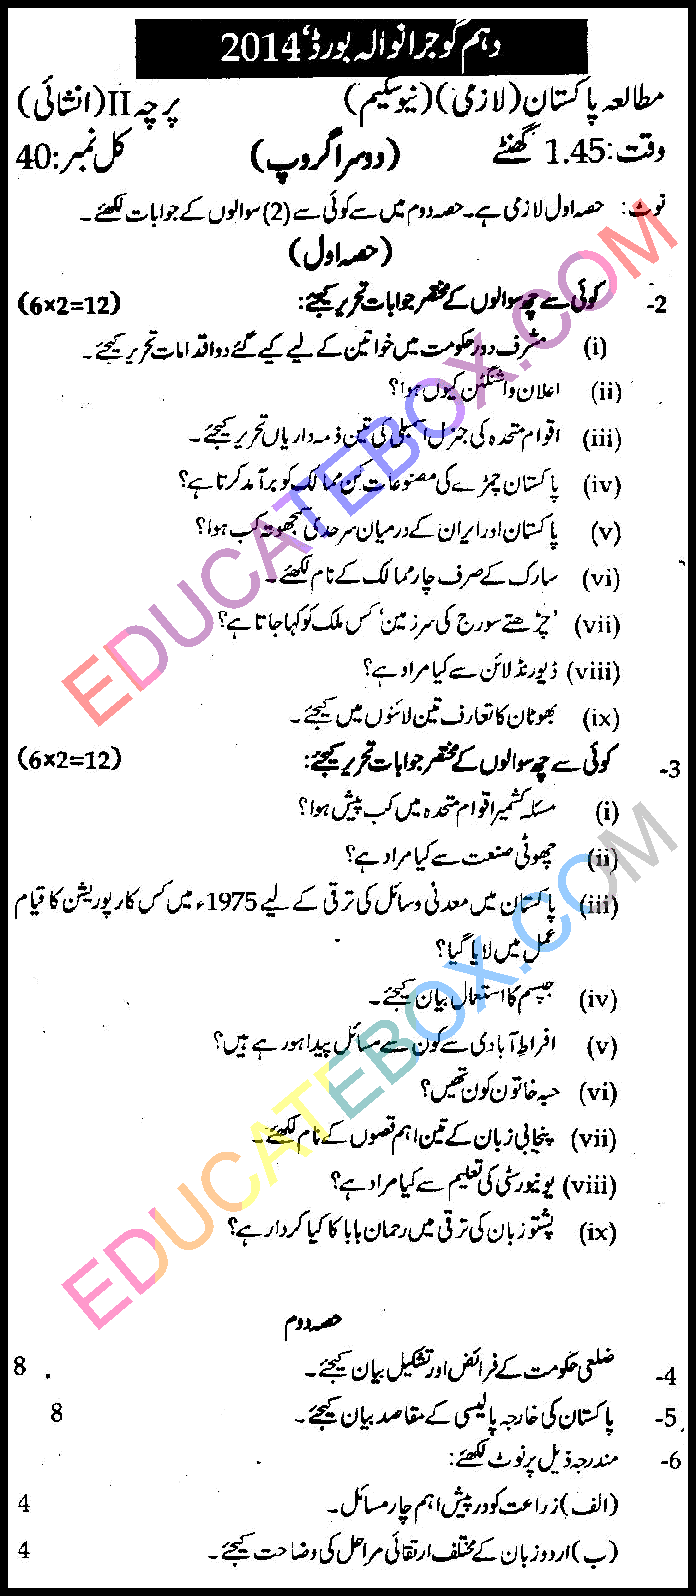 Past Paper Class 10 Pak Studies Gujranwala Board 2014 Subjective Type Group 2 اپ ٹوڈیٹ پیپر معاشرتی علوم 2014 گوجرانوالہ بورڈ گروپ 2 انشائیہ طرز